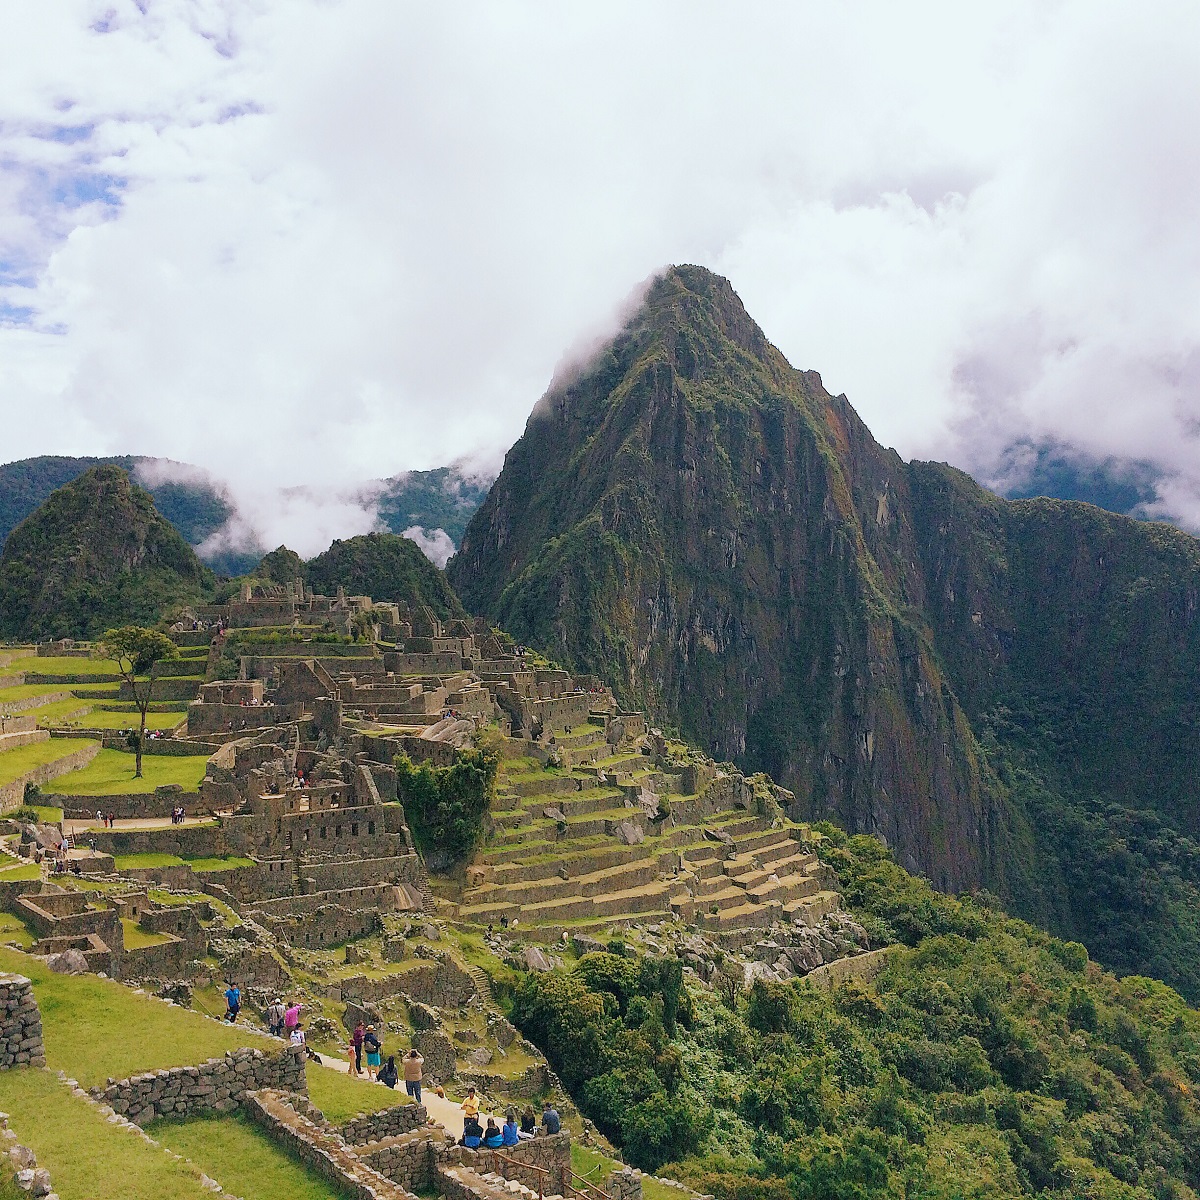 Machu Picchu aumenta aforo tras pandemia